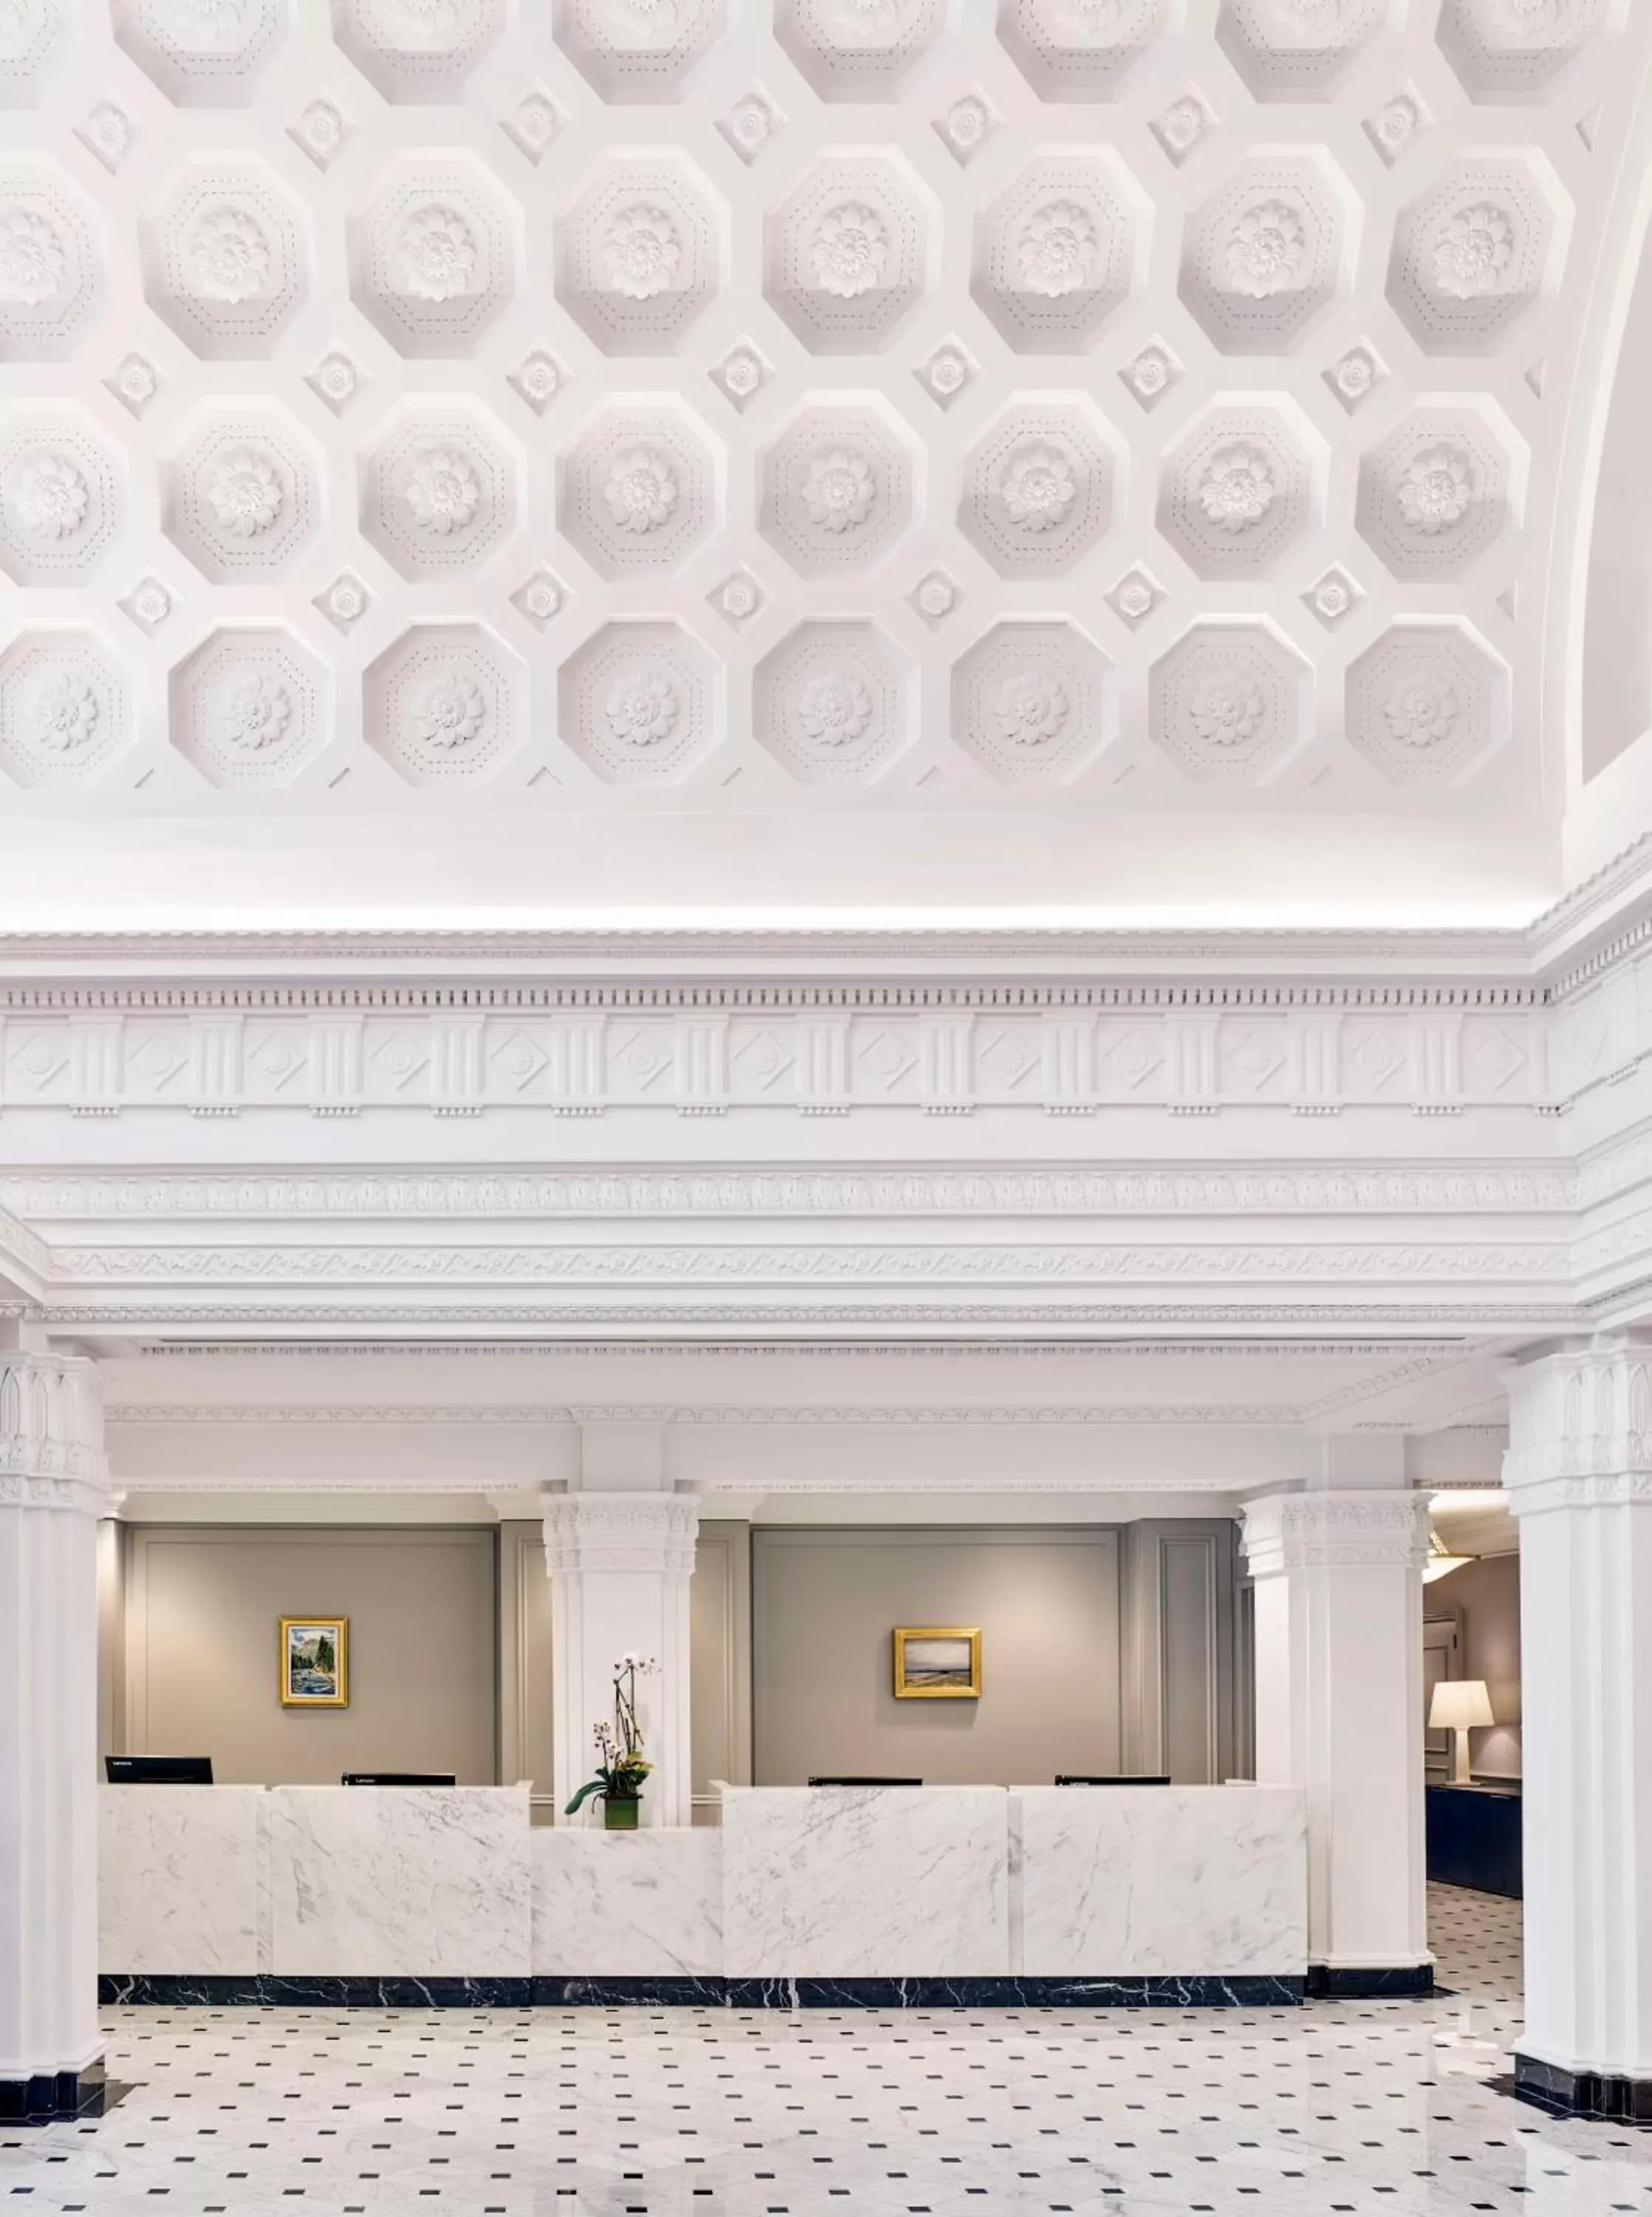 Lobby or reception in Hamilton Hotel - Washington DC